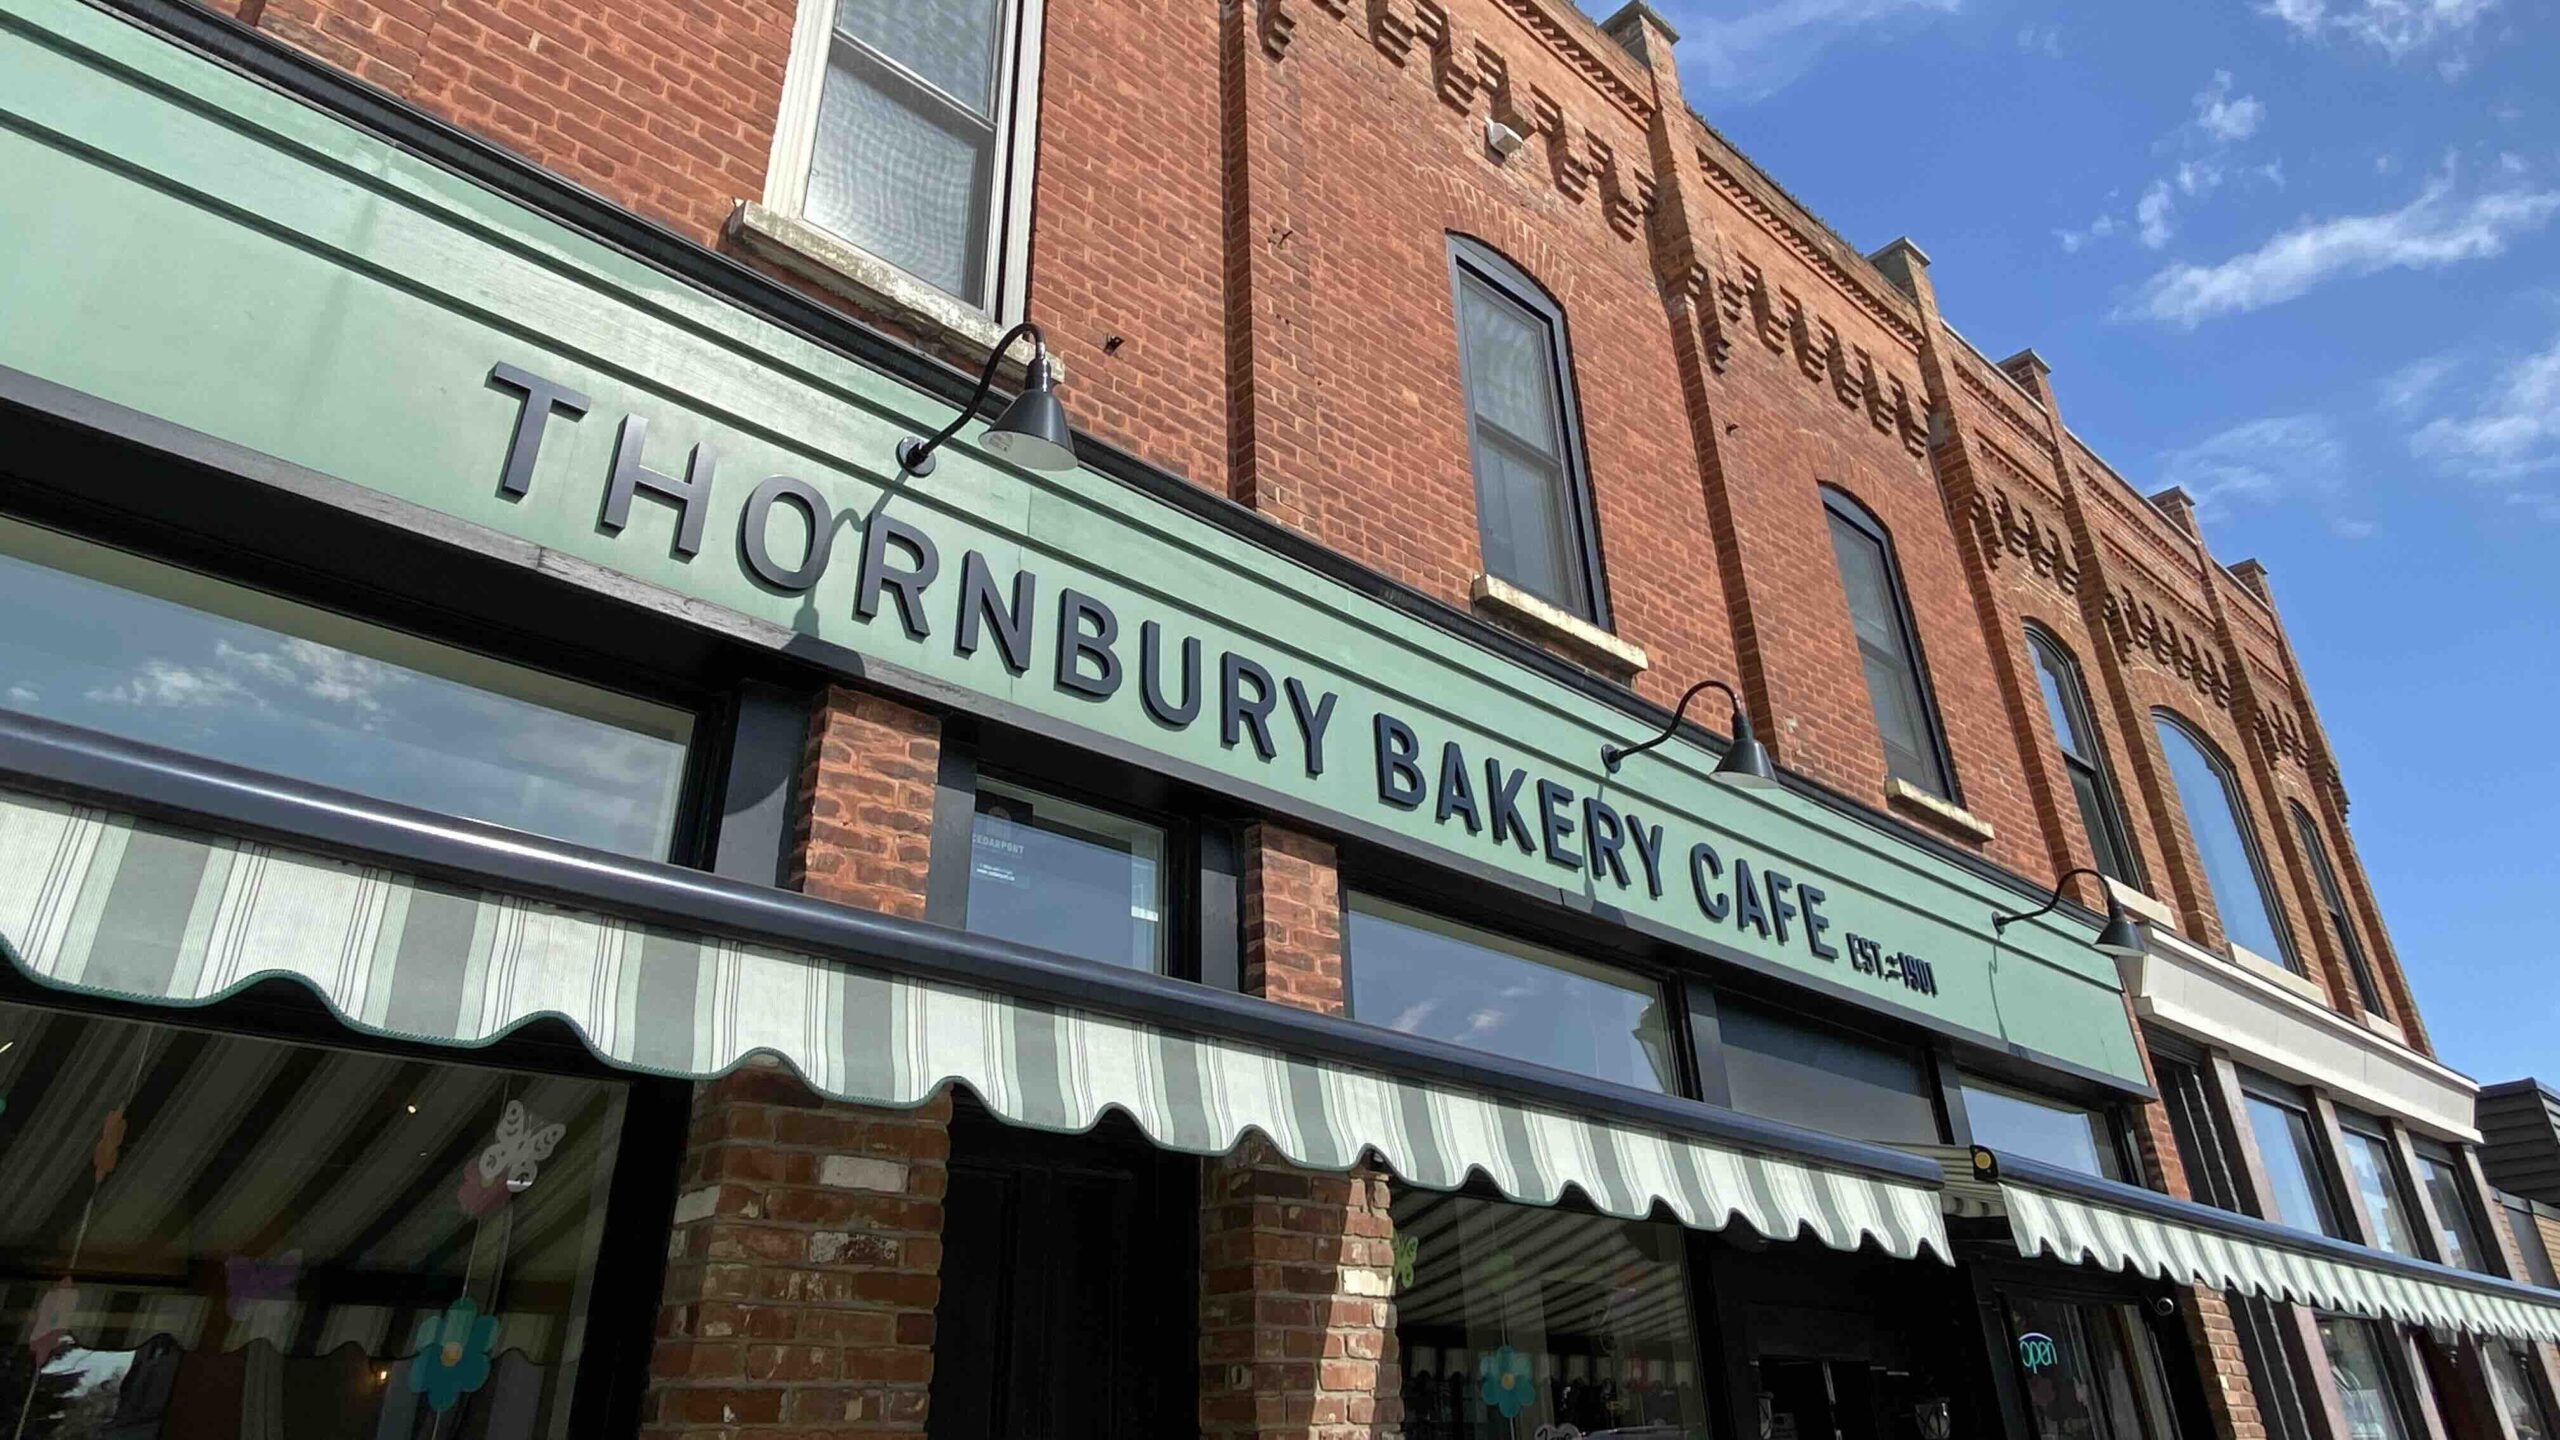 Thornbury Bakery Cafe exterior of building